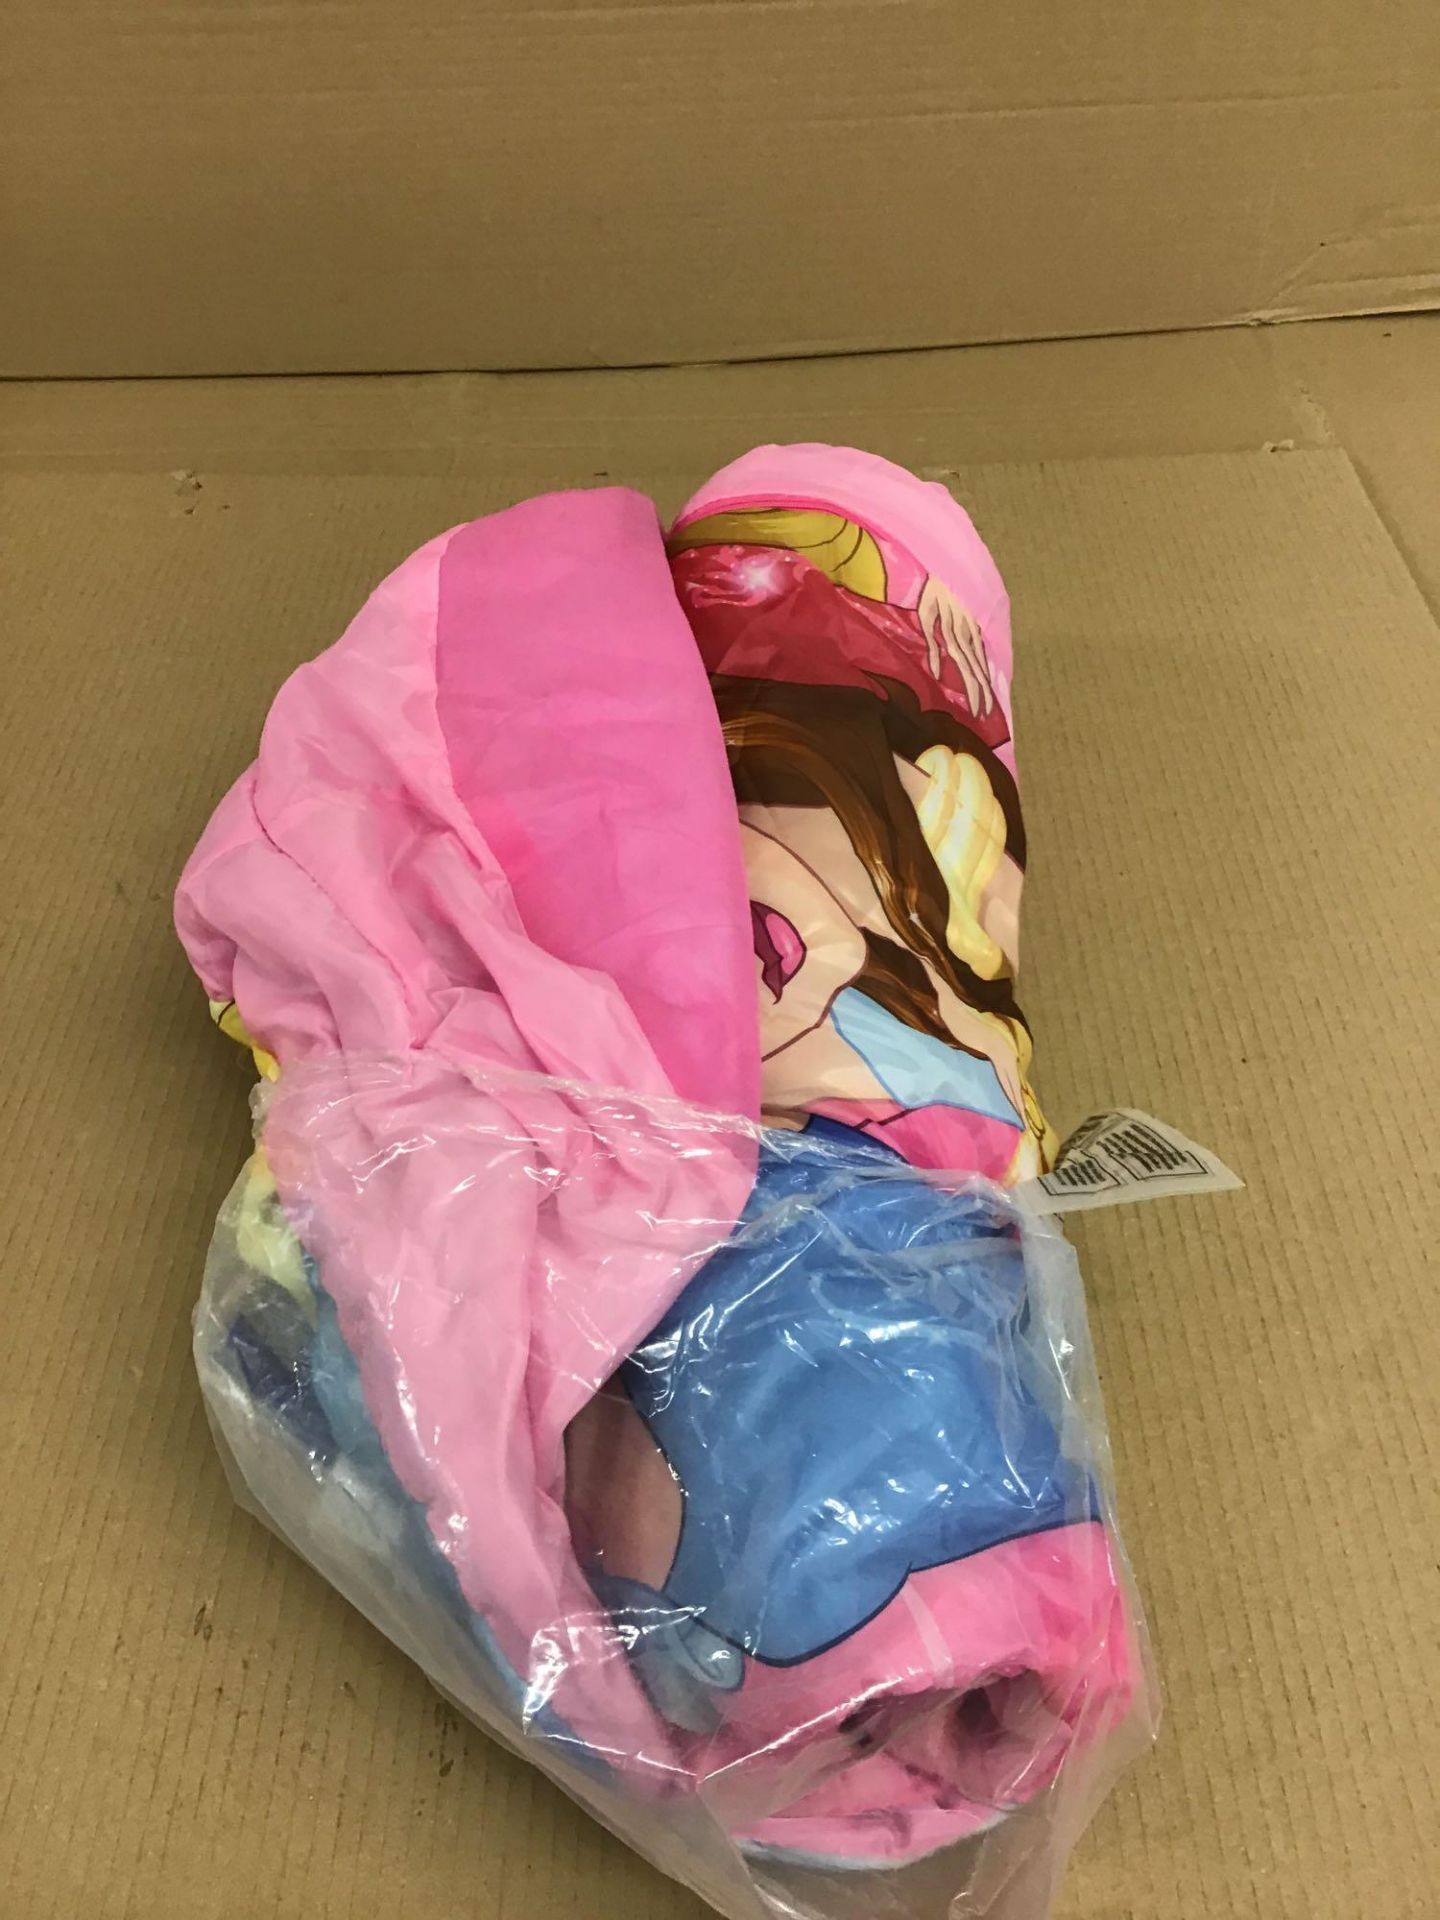 Disney Princess Junior ReadyBed Air Bed and Sleeping Bag, £30.00 RRP - Image 3 of 5